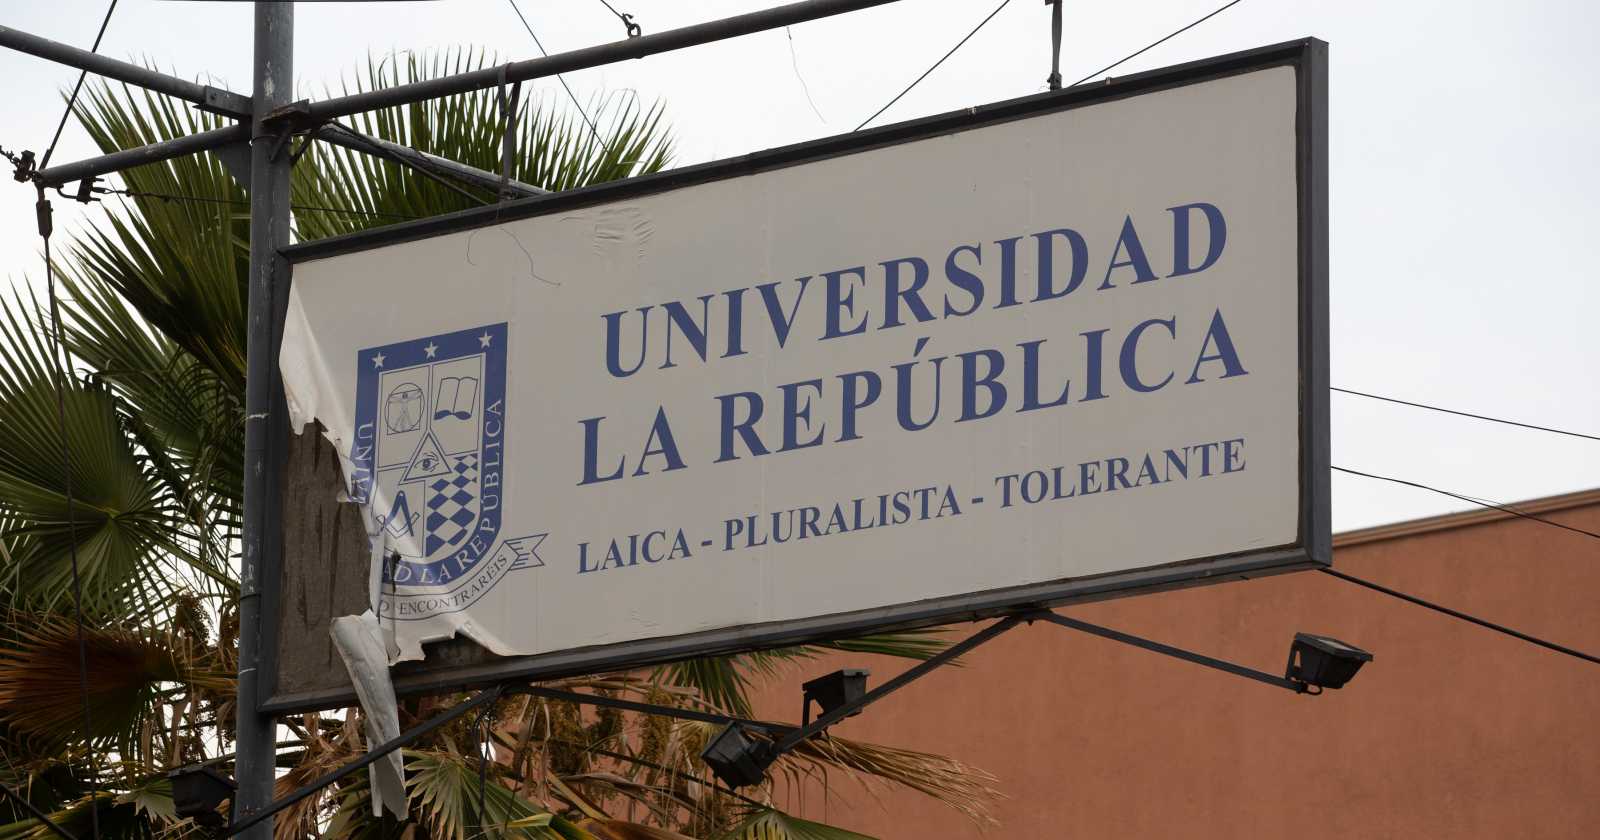 Mineduc Universidad La República